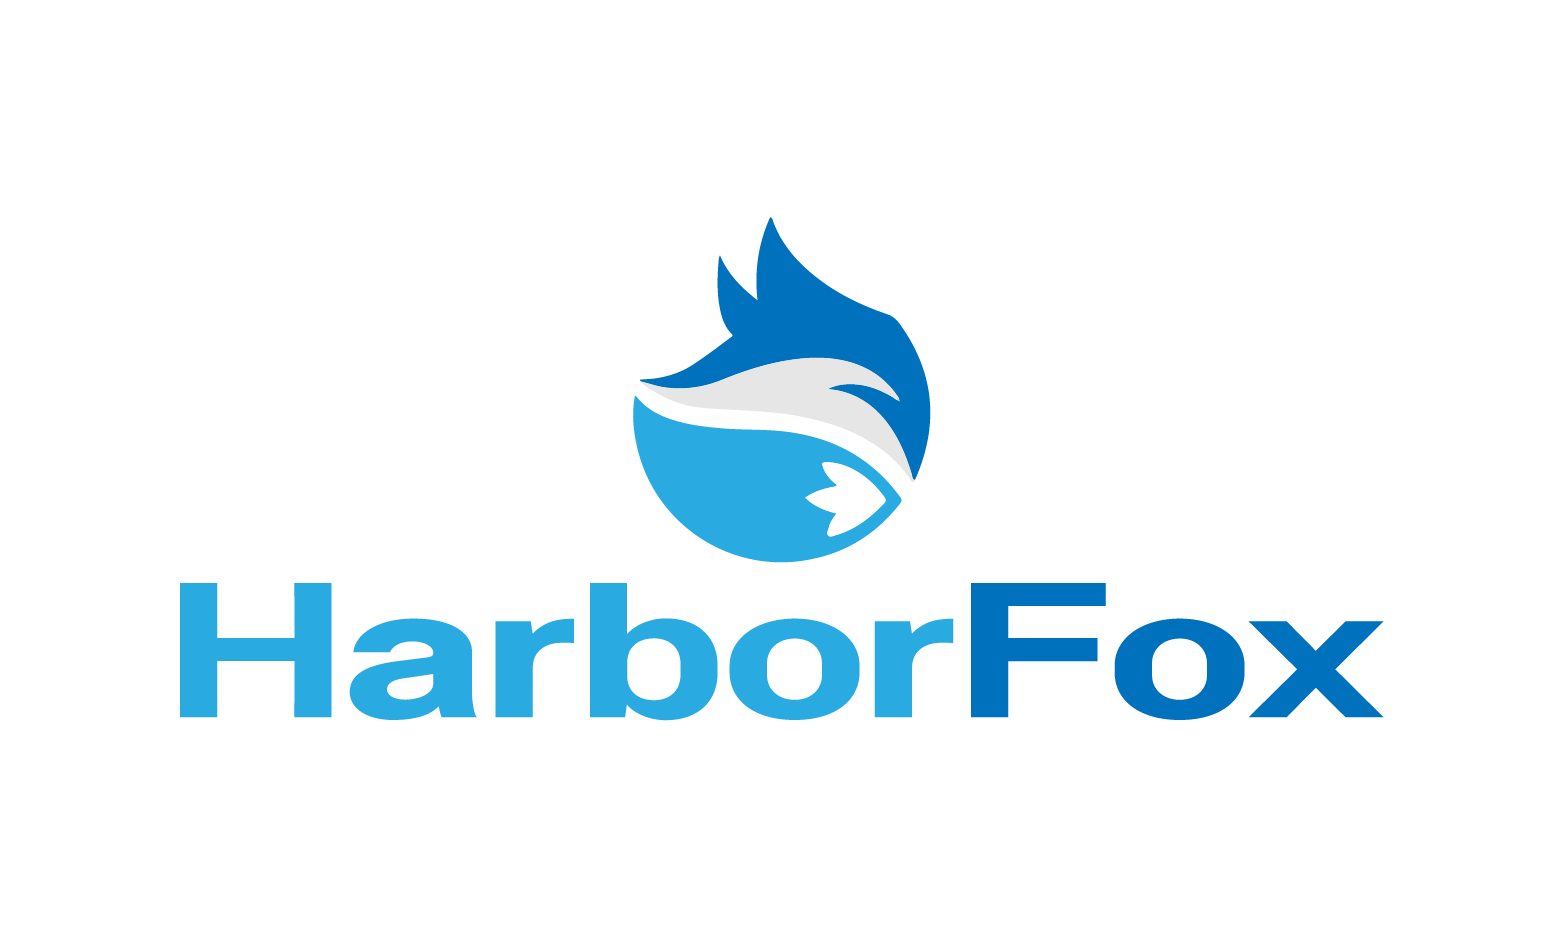 HarborFox.com - Creative brandable domain for sale